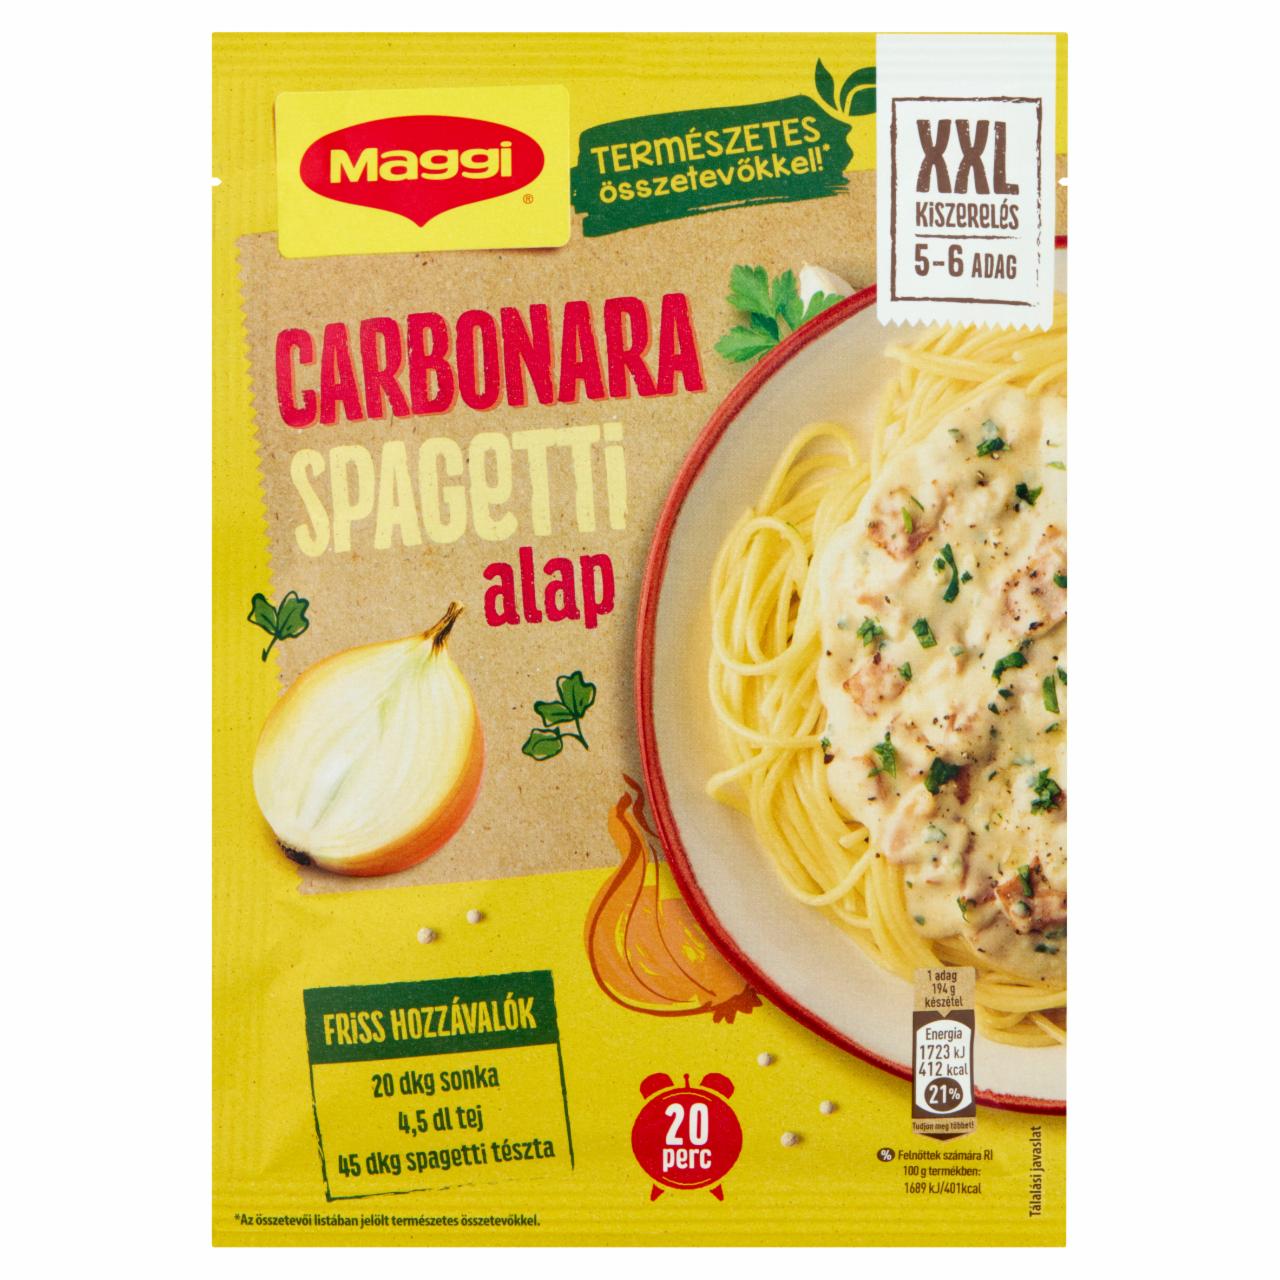 Képek - Maggi Carbonara spagetti alap 43 g